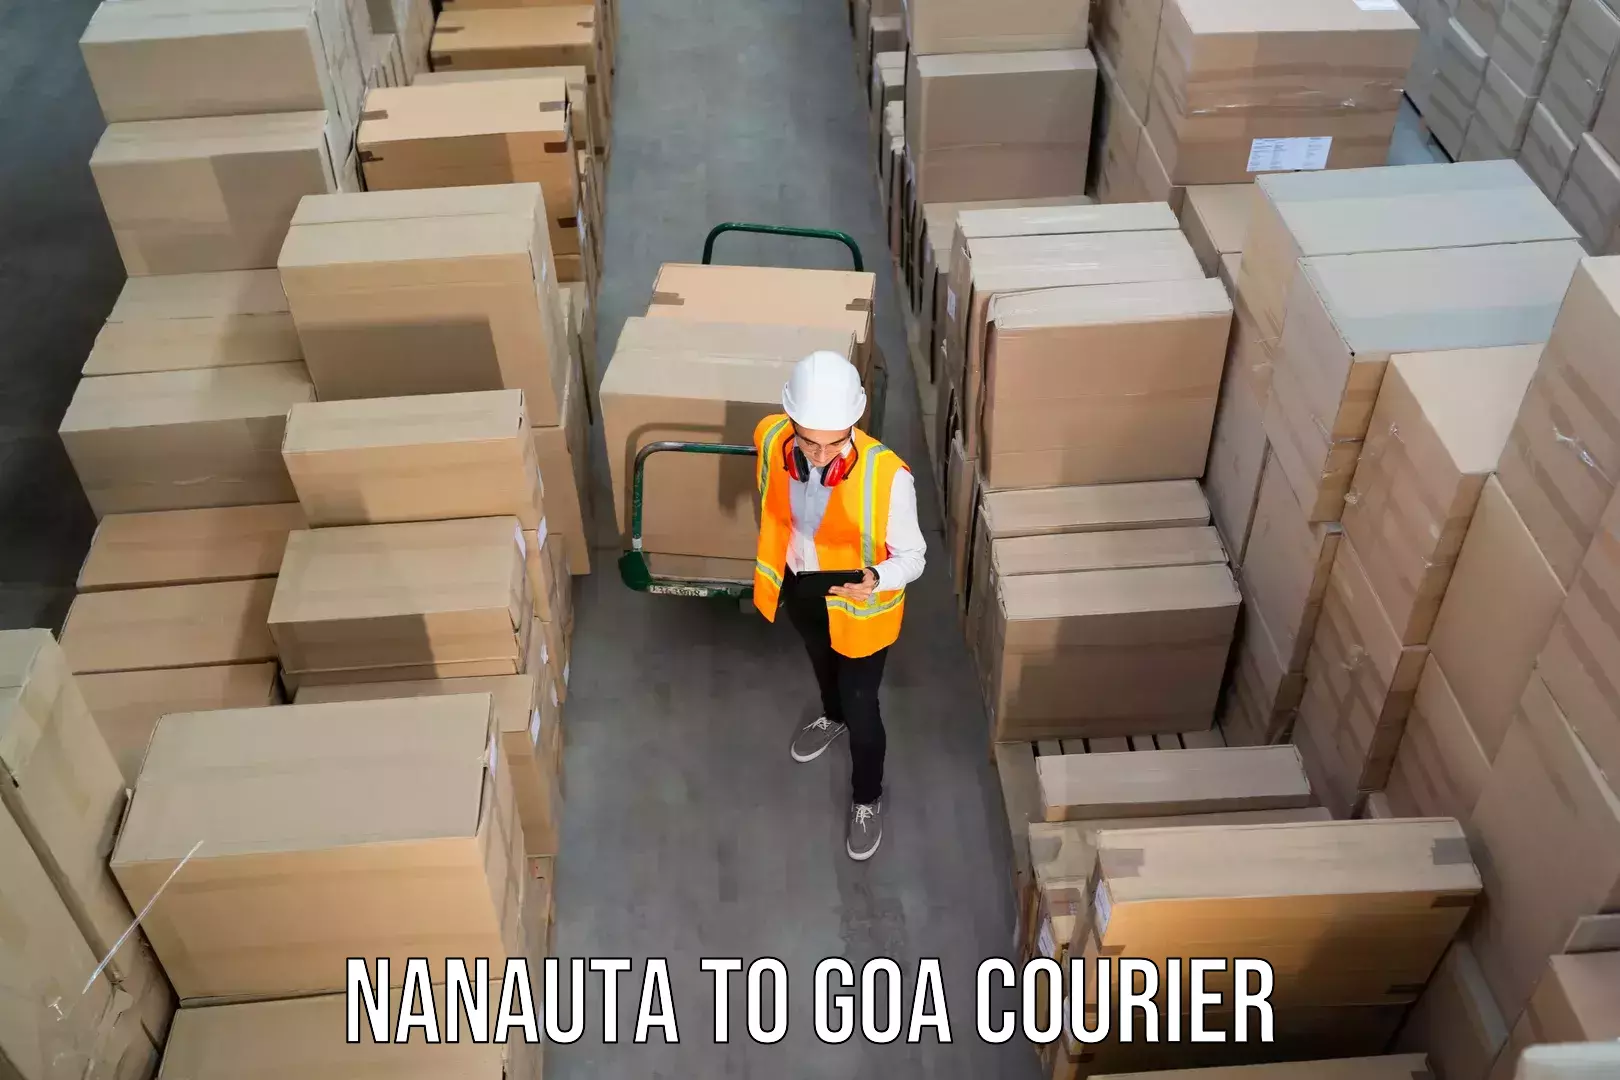 Same-day delivery options Nanauta to Goa